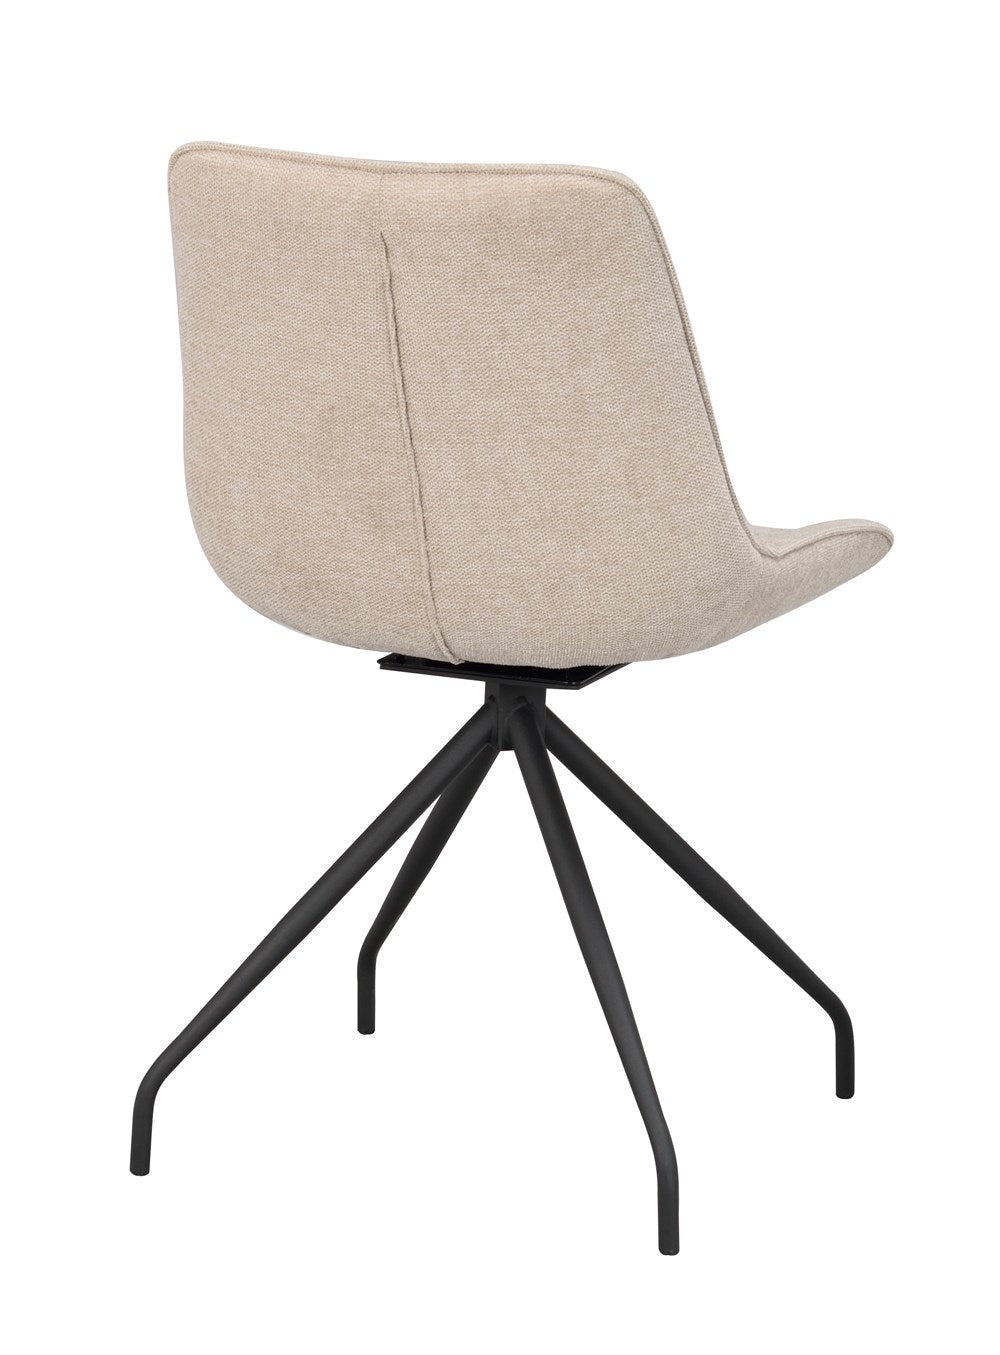 120085_d-rossport-chair-beige-fabric_black